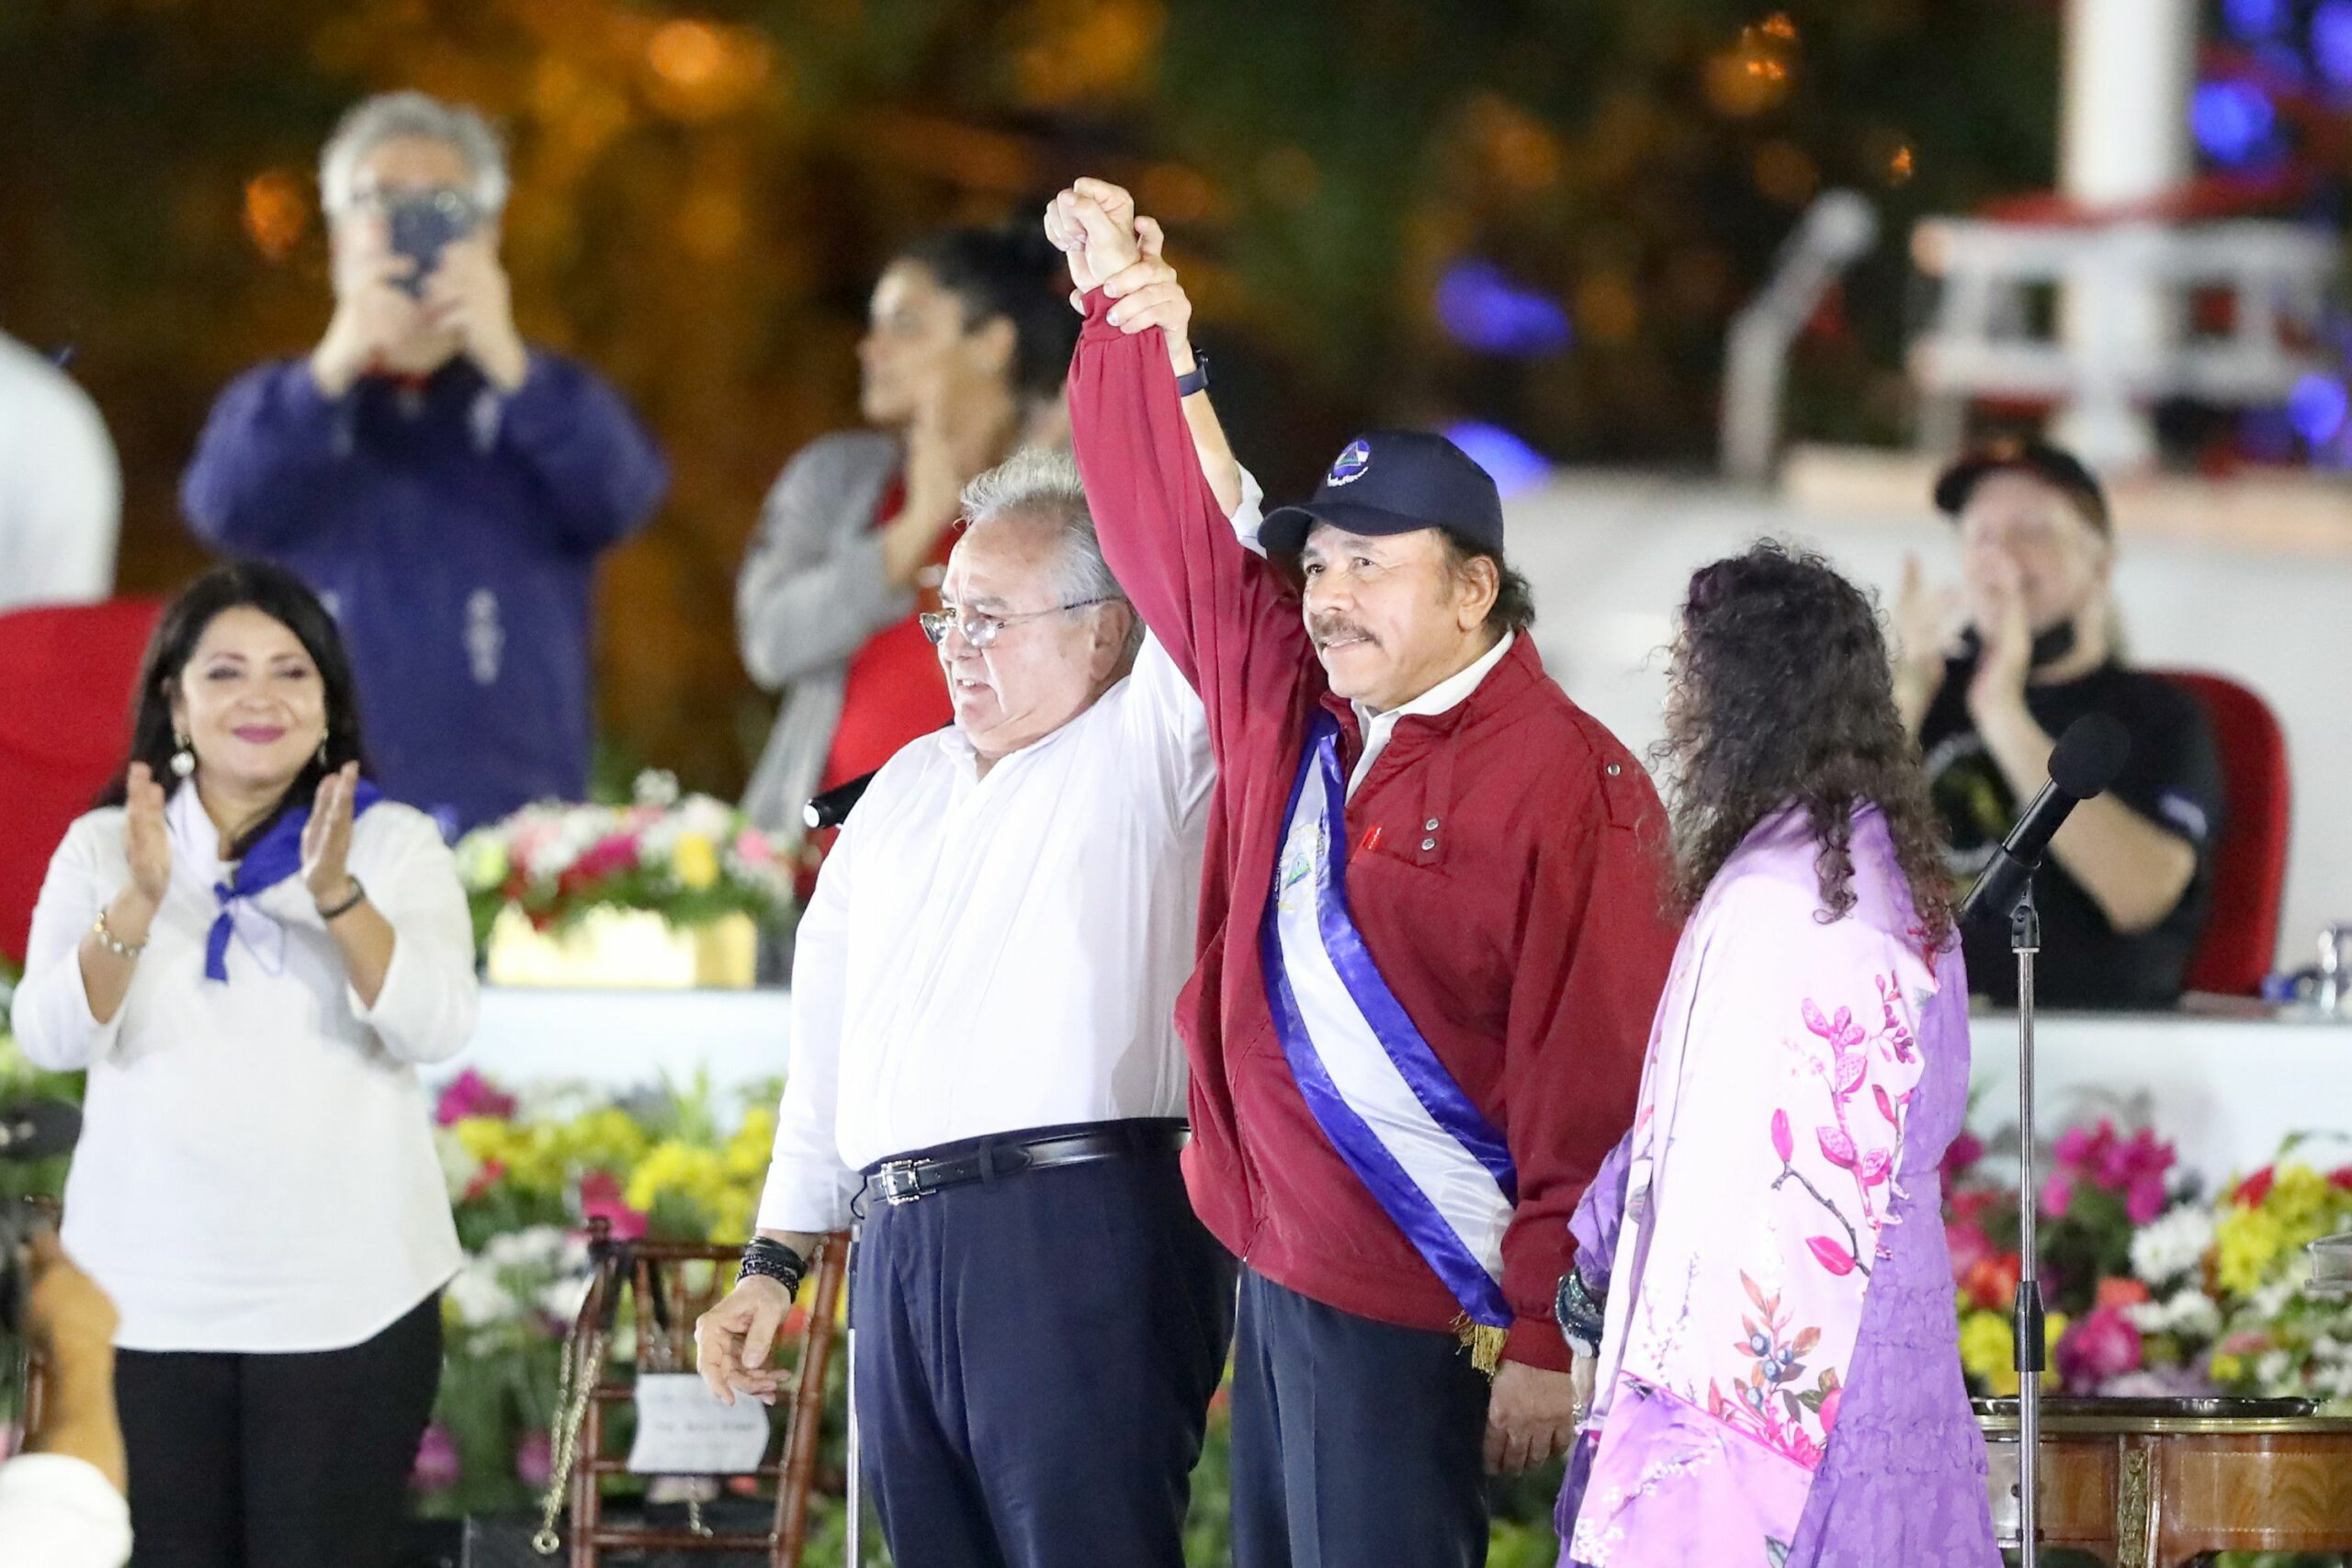 030703 Nacaragua scaled - Recht auf freie Entwicklung verteidigen - Daniel Ortega, FSLN, Nicaragua - Internationales